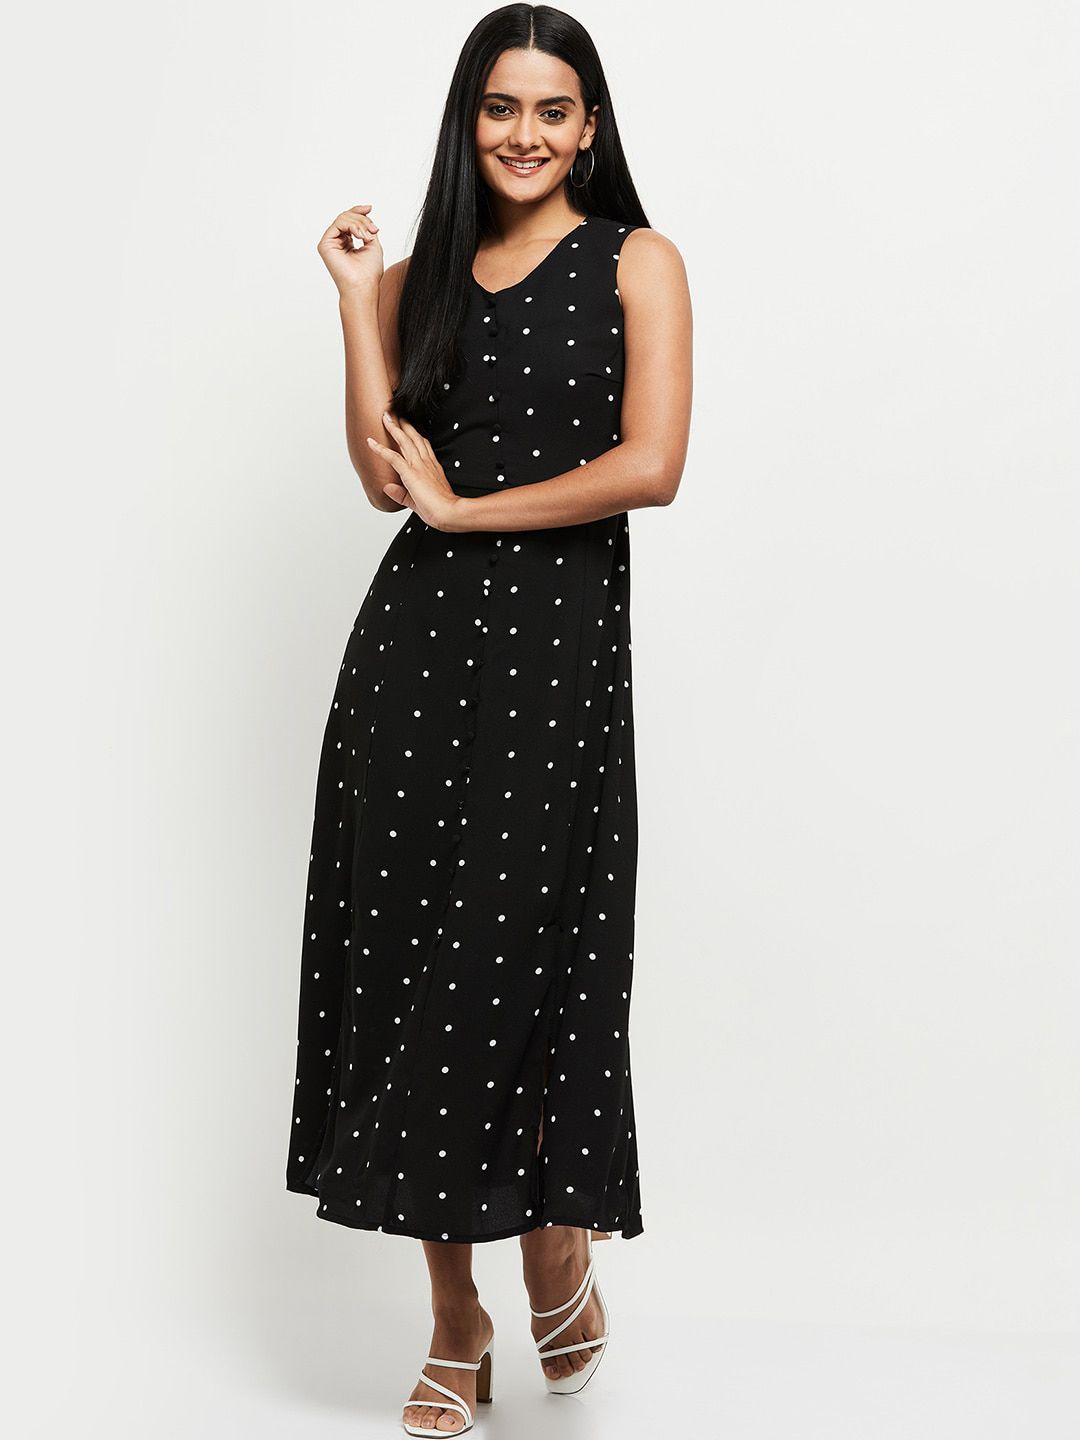 max-women-black-polka-dot-printed-fit-&-flare-dress